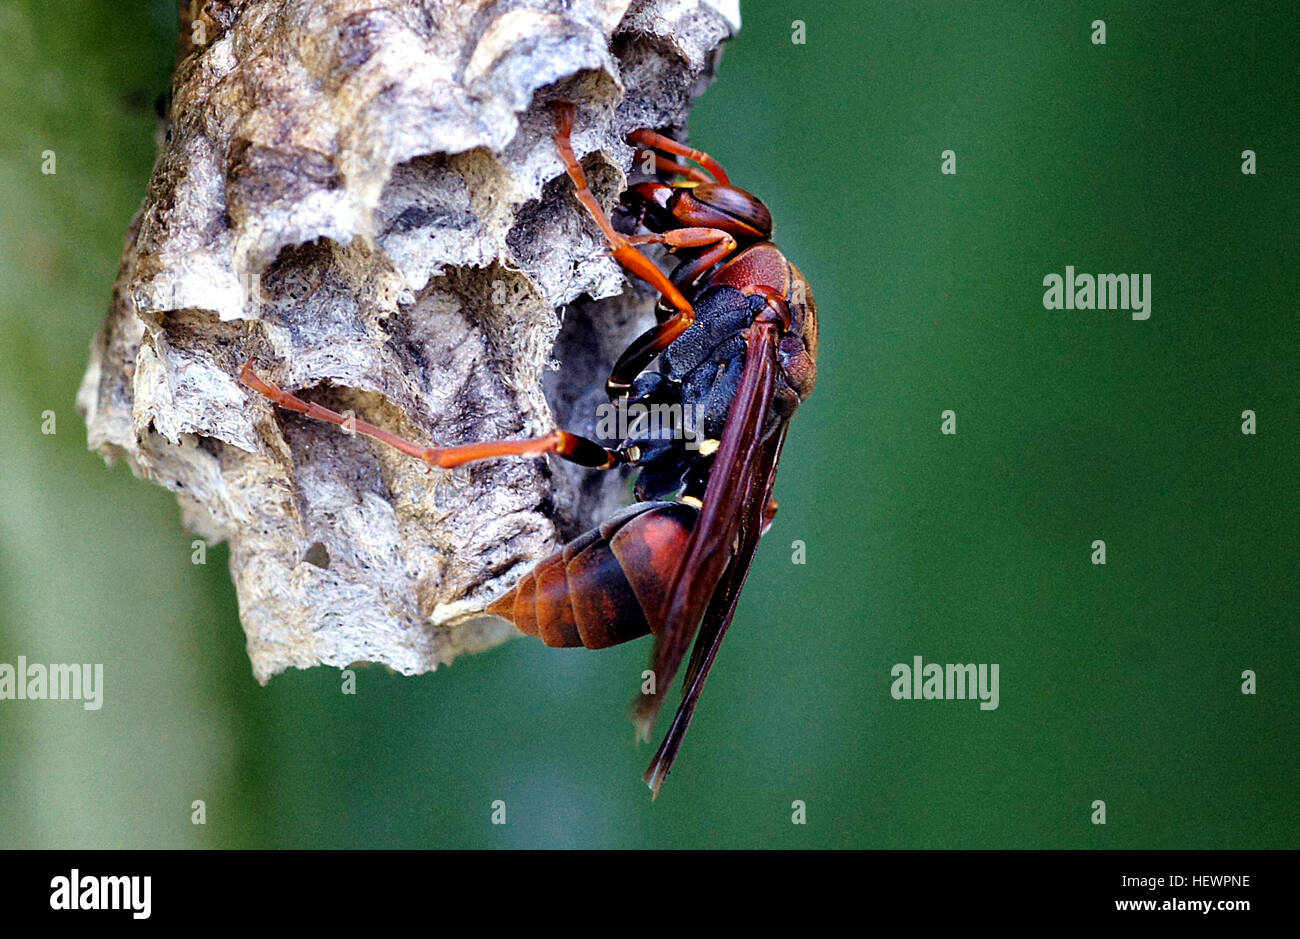 Wasps similar fotografías e imágenes de alta resolución - Alamy